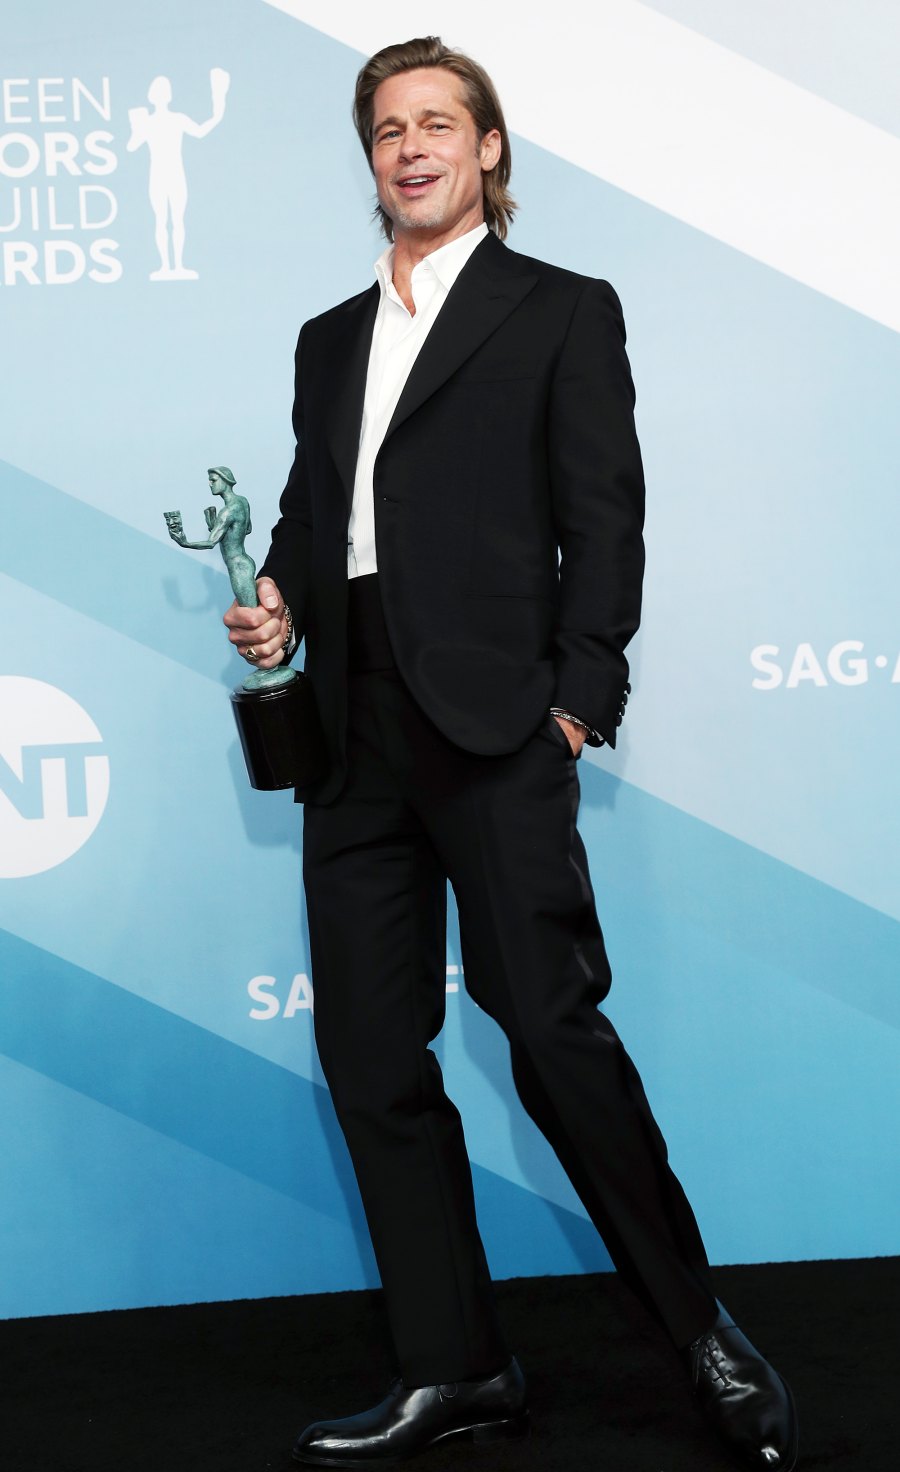 SAG Awards 2020 Hottest Hunks - Brad Pitt